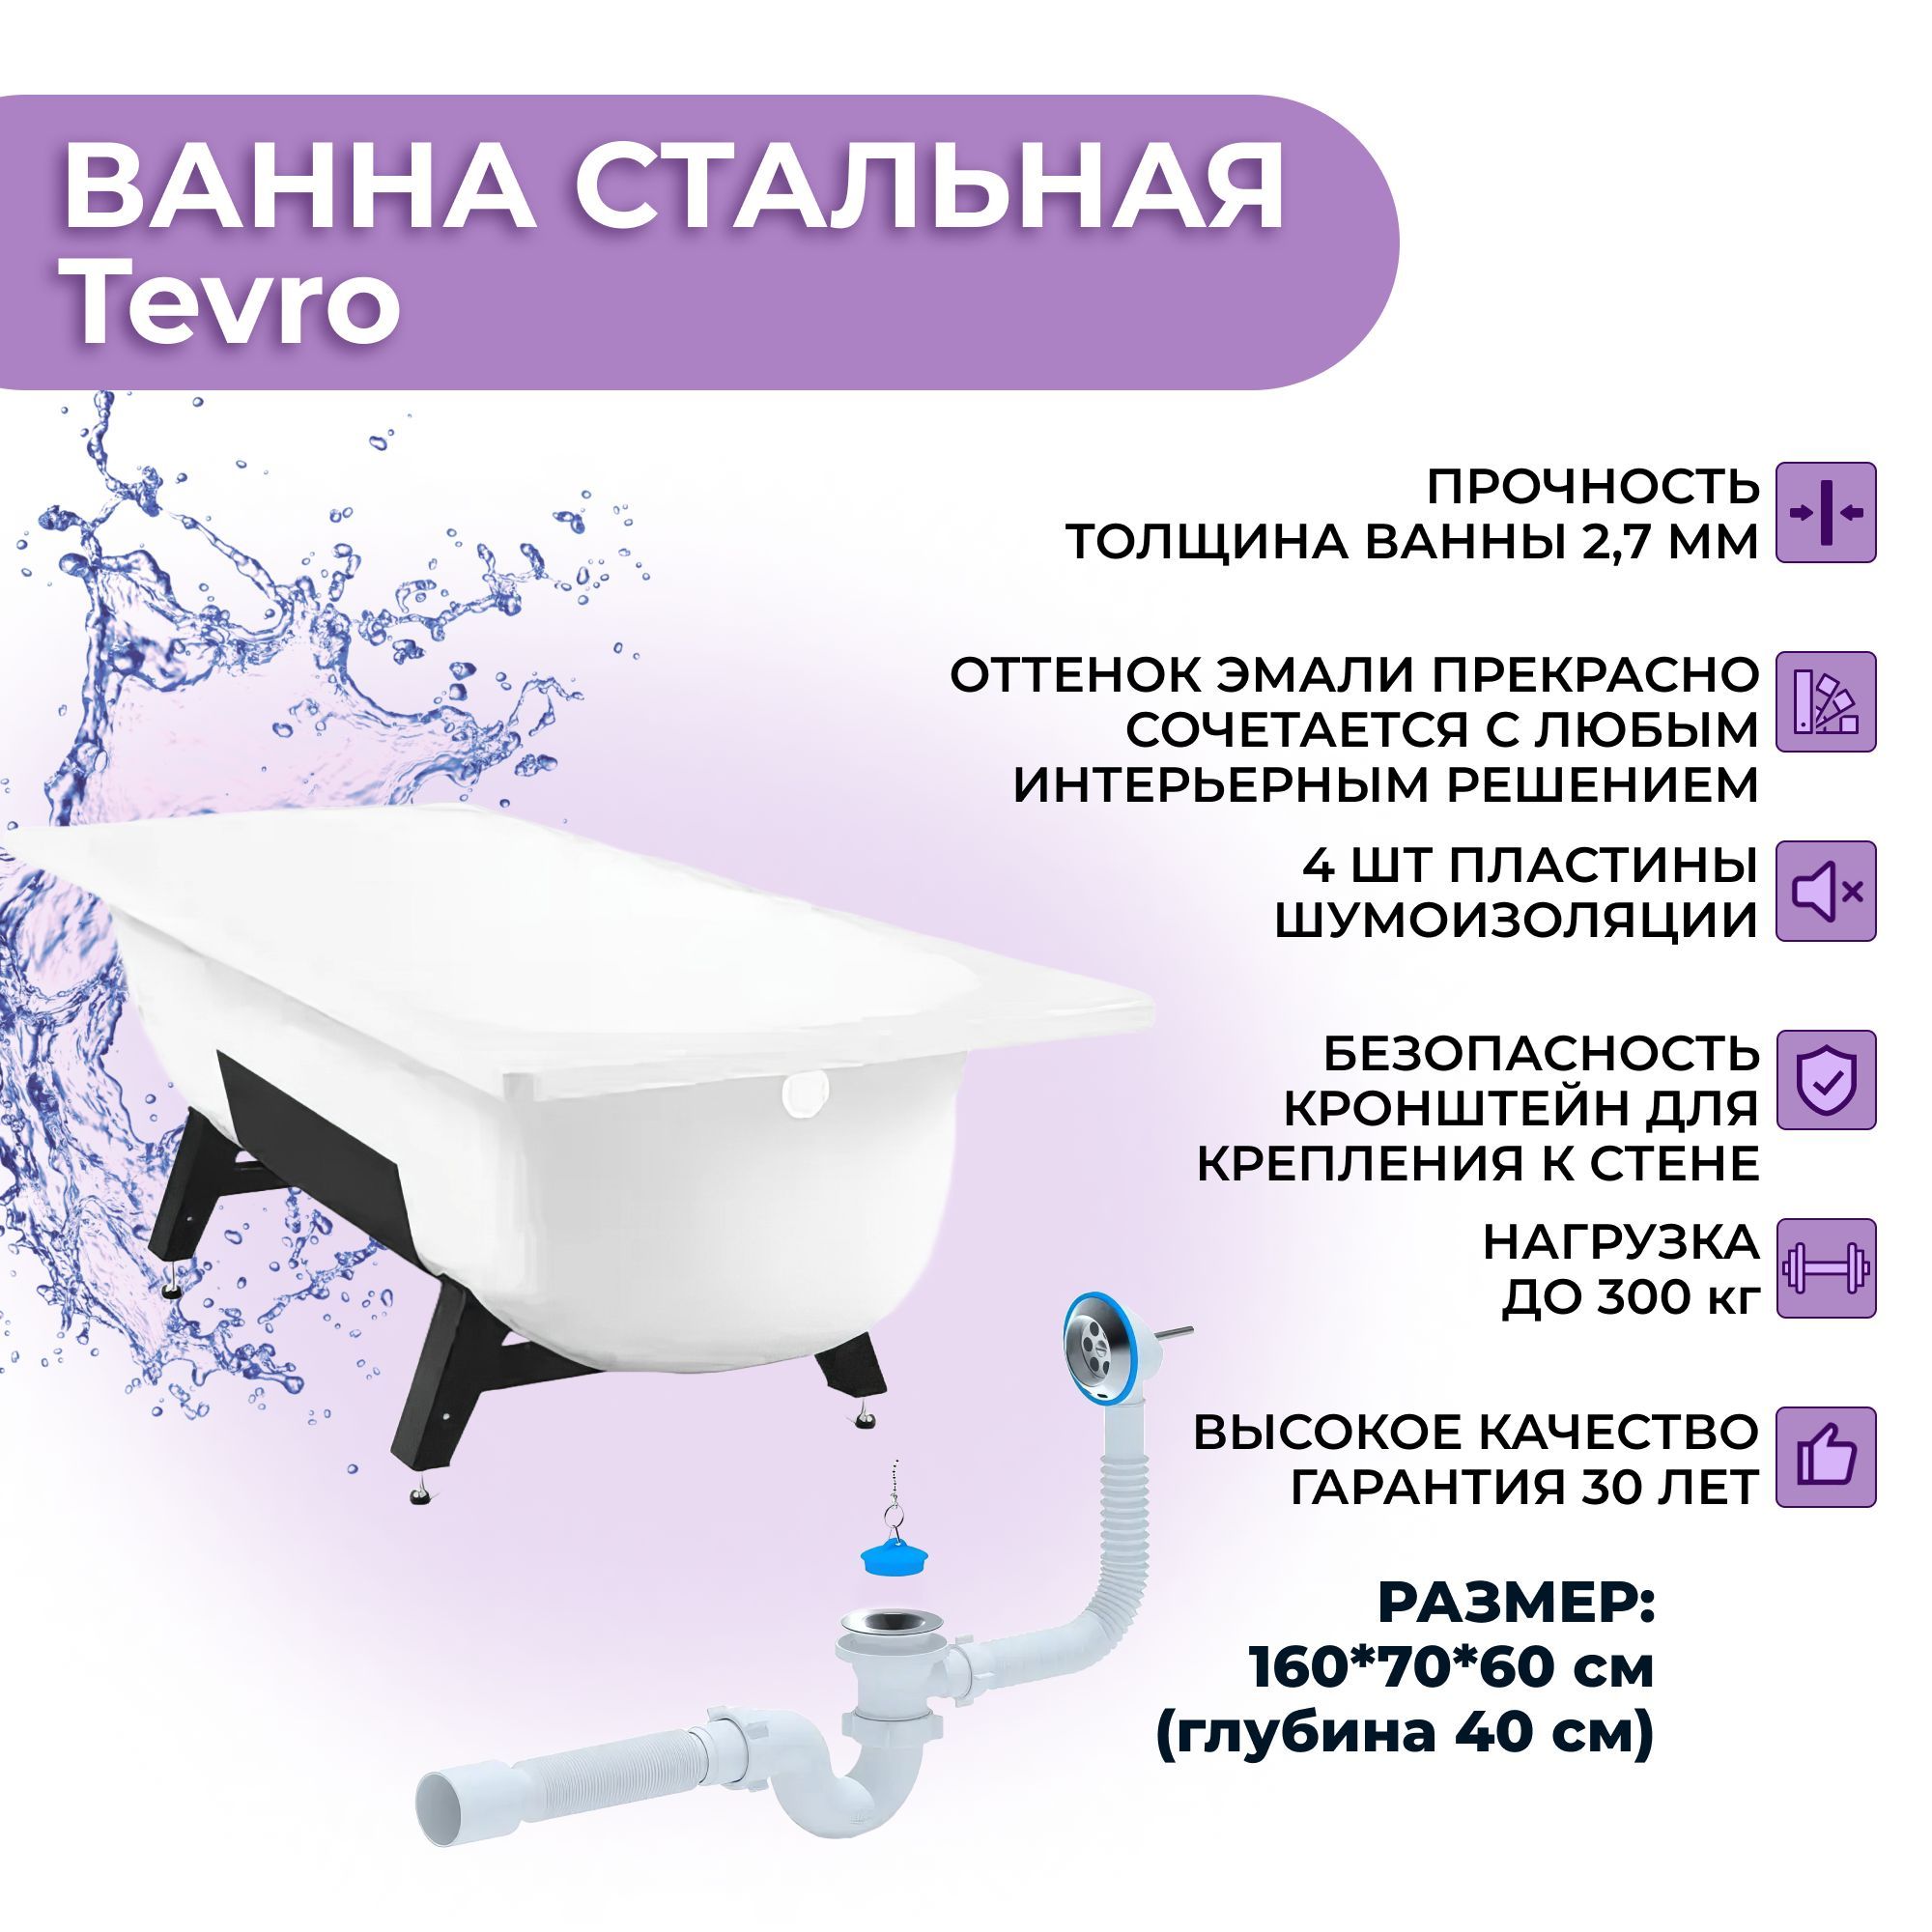 Ванна стальная tevro. Ванна сталь"виз"Tevro 1,6м*0,7 "белый Лотос"с ножками DTC. Ванная виз Tevro. Схема ванны виз Tevro. Виз Tevro 170х70 Размеры.